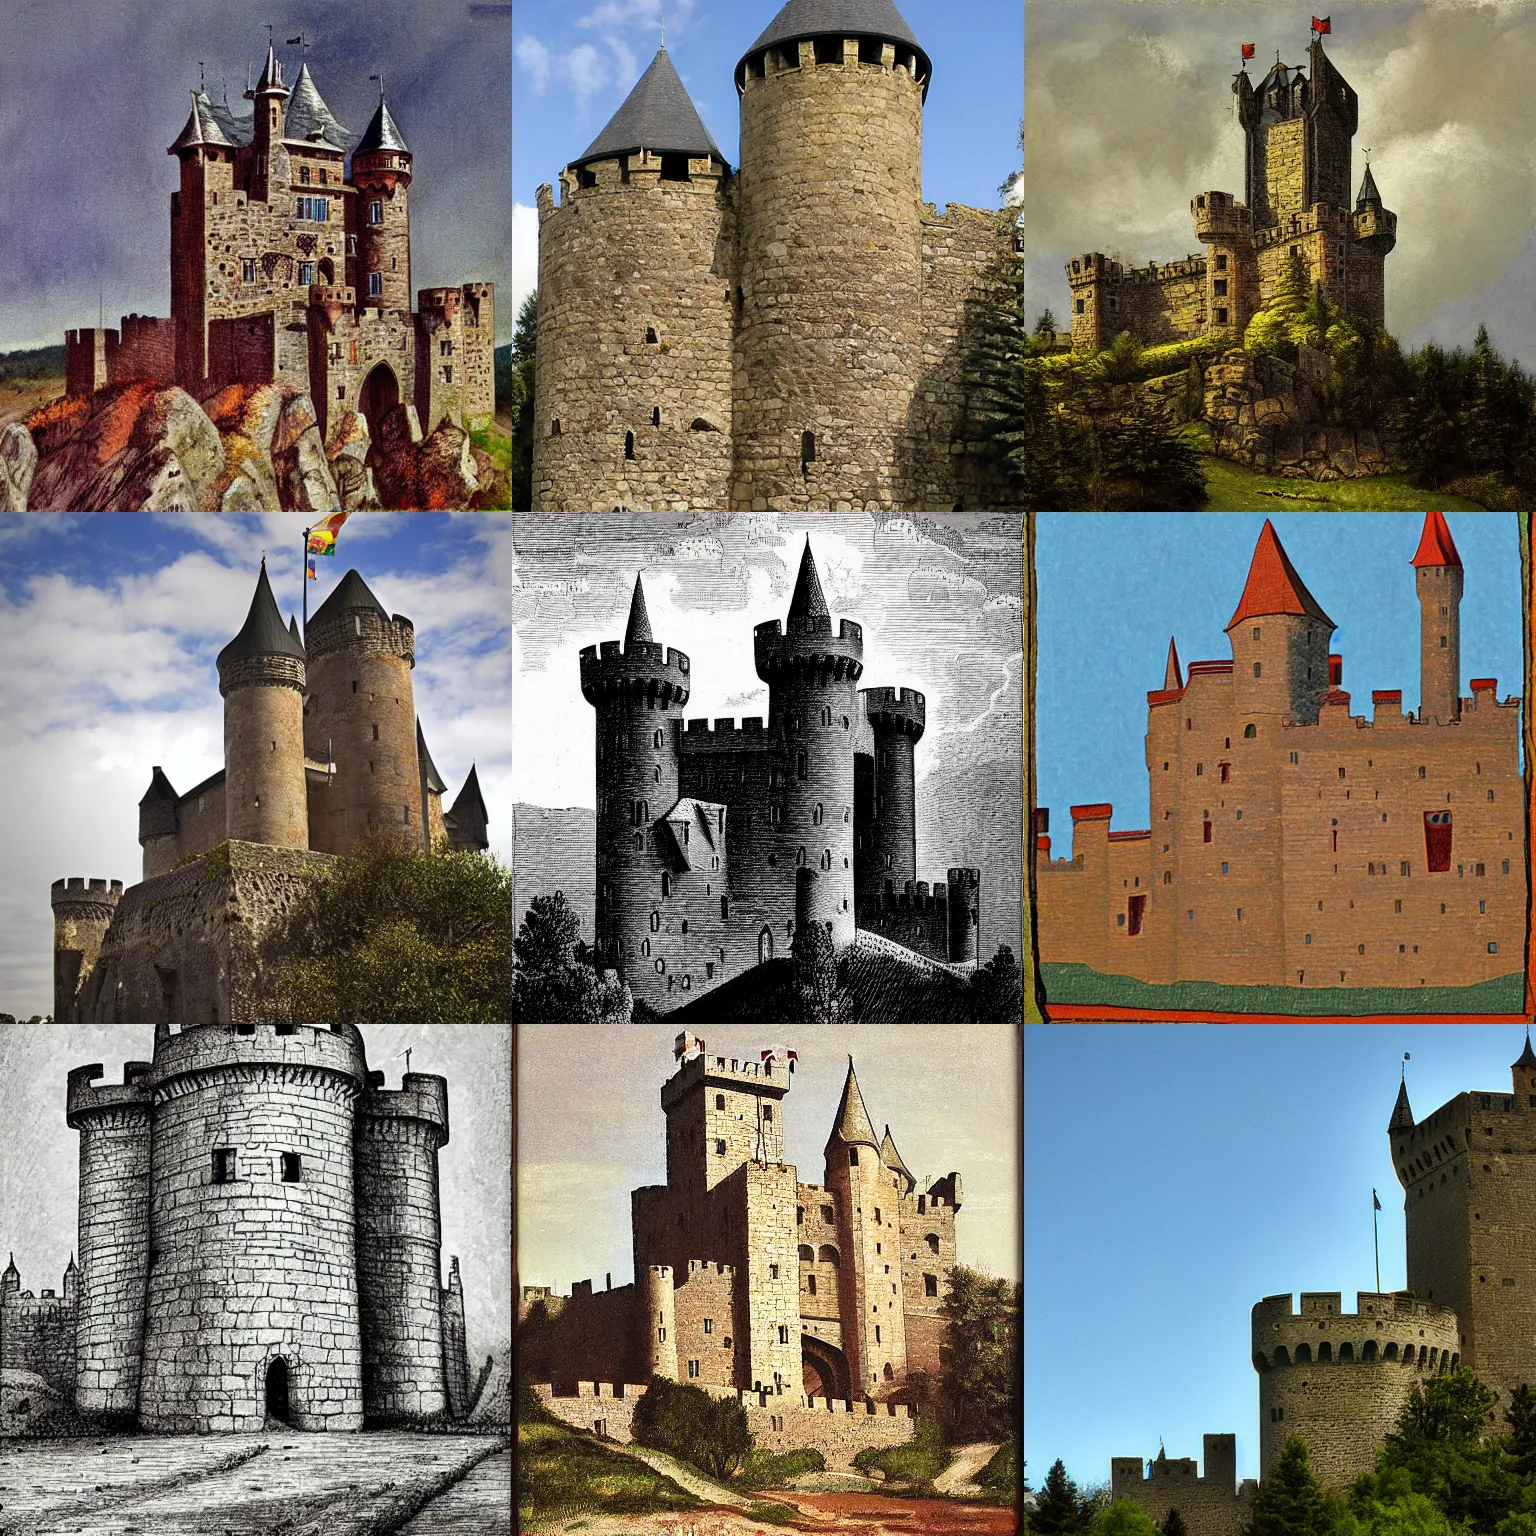 Prompt: medieval castle, by harry sternberg